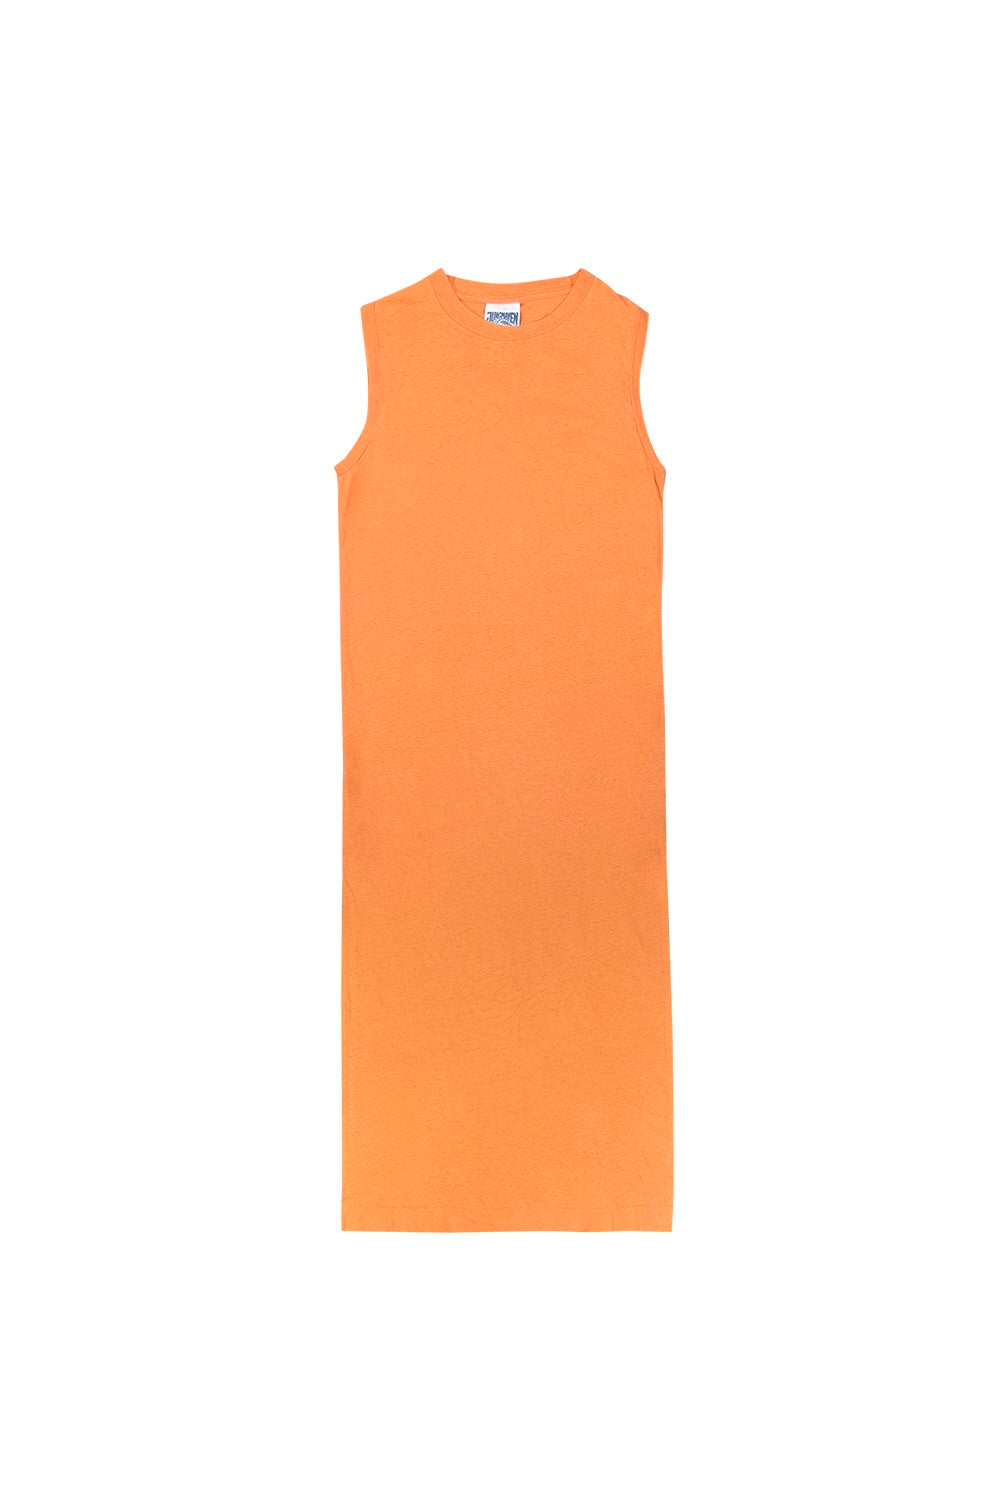 Hermosa Dress | Jungmaven Hemp Clothing & Accessories / Color: Apricot Crush